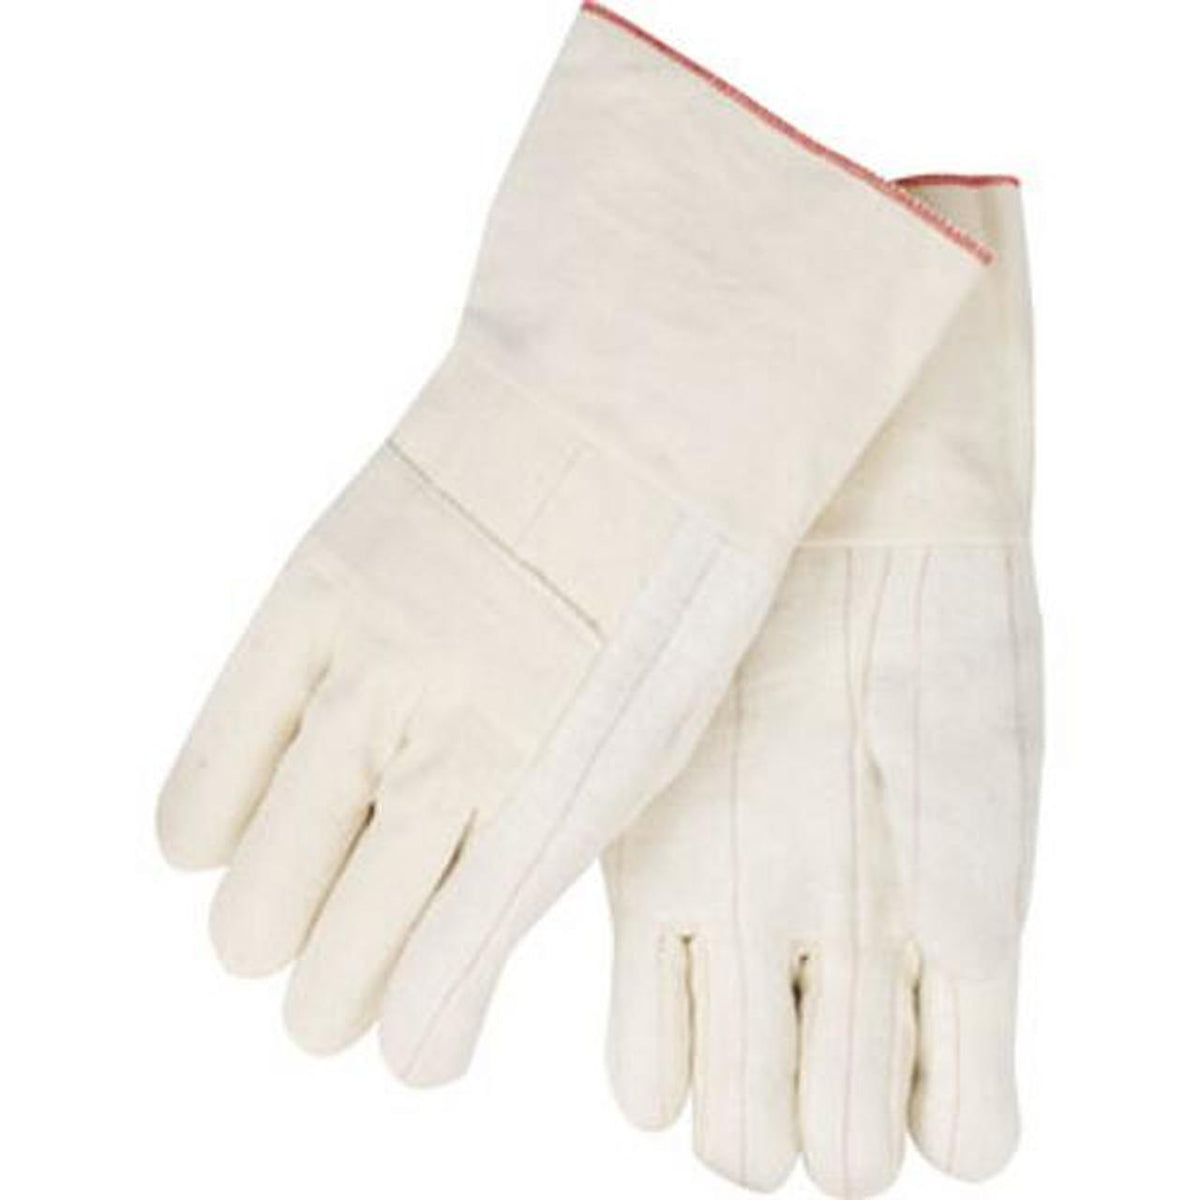 Revco 1424 24 oz. Long Cuff Cotton Hot Mill Industrial Glove (1 Pair) –